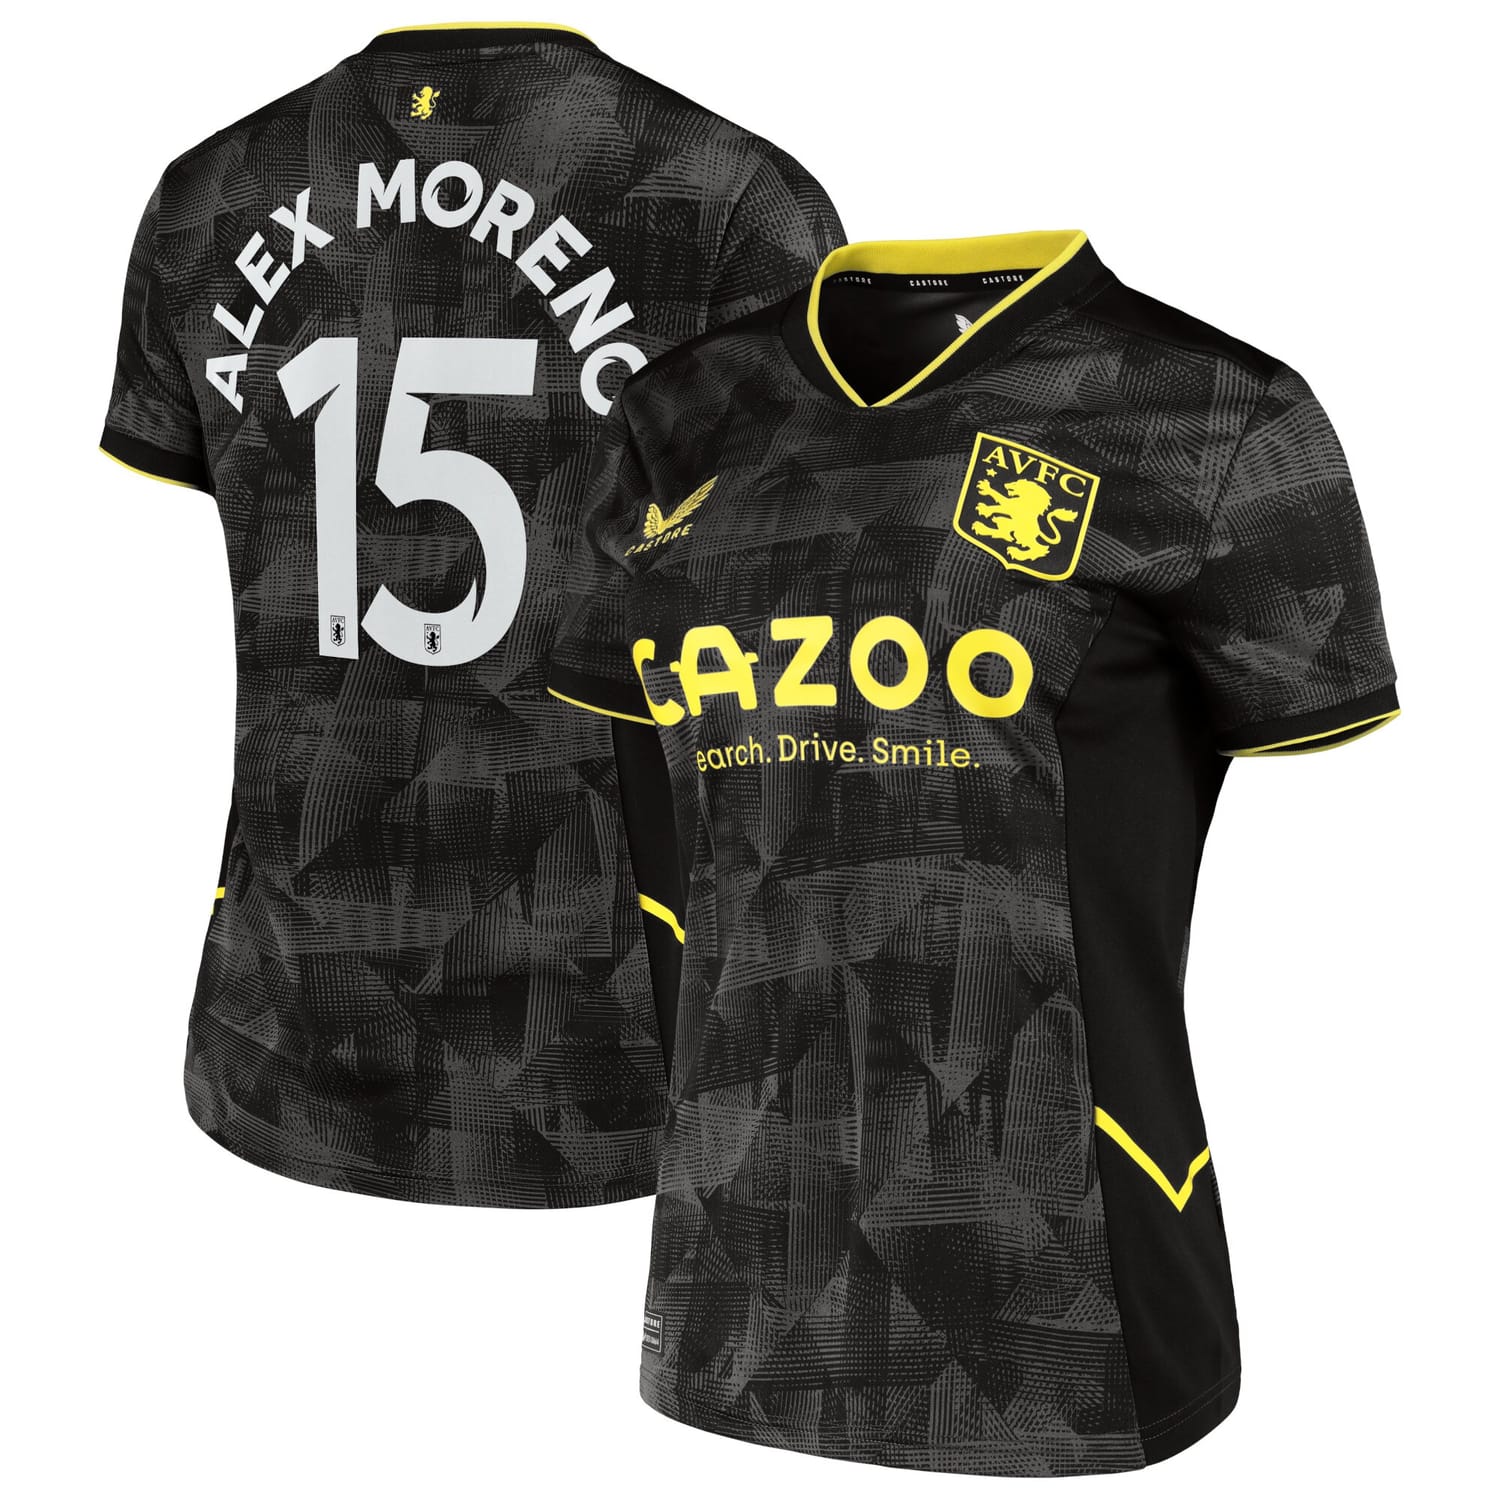 Premier League Aston Villa Third Cup Jersey Shirt 2022-23 player Alex Moreno 15 printing for Women